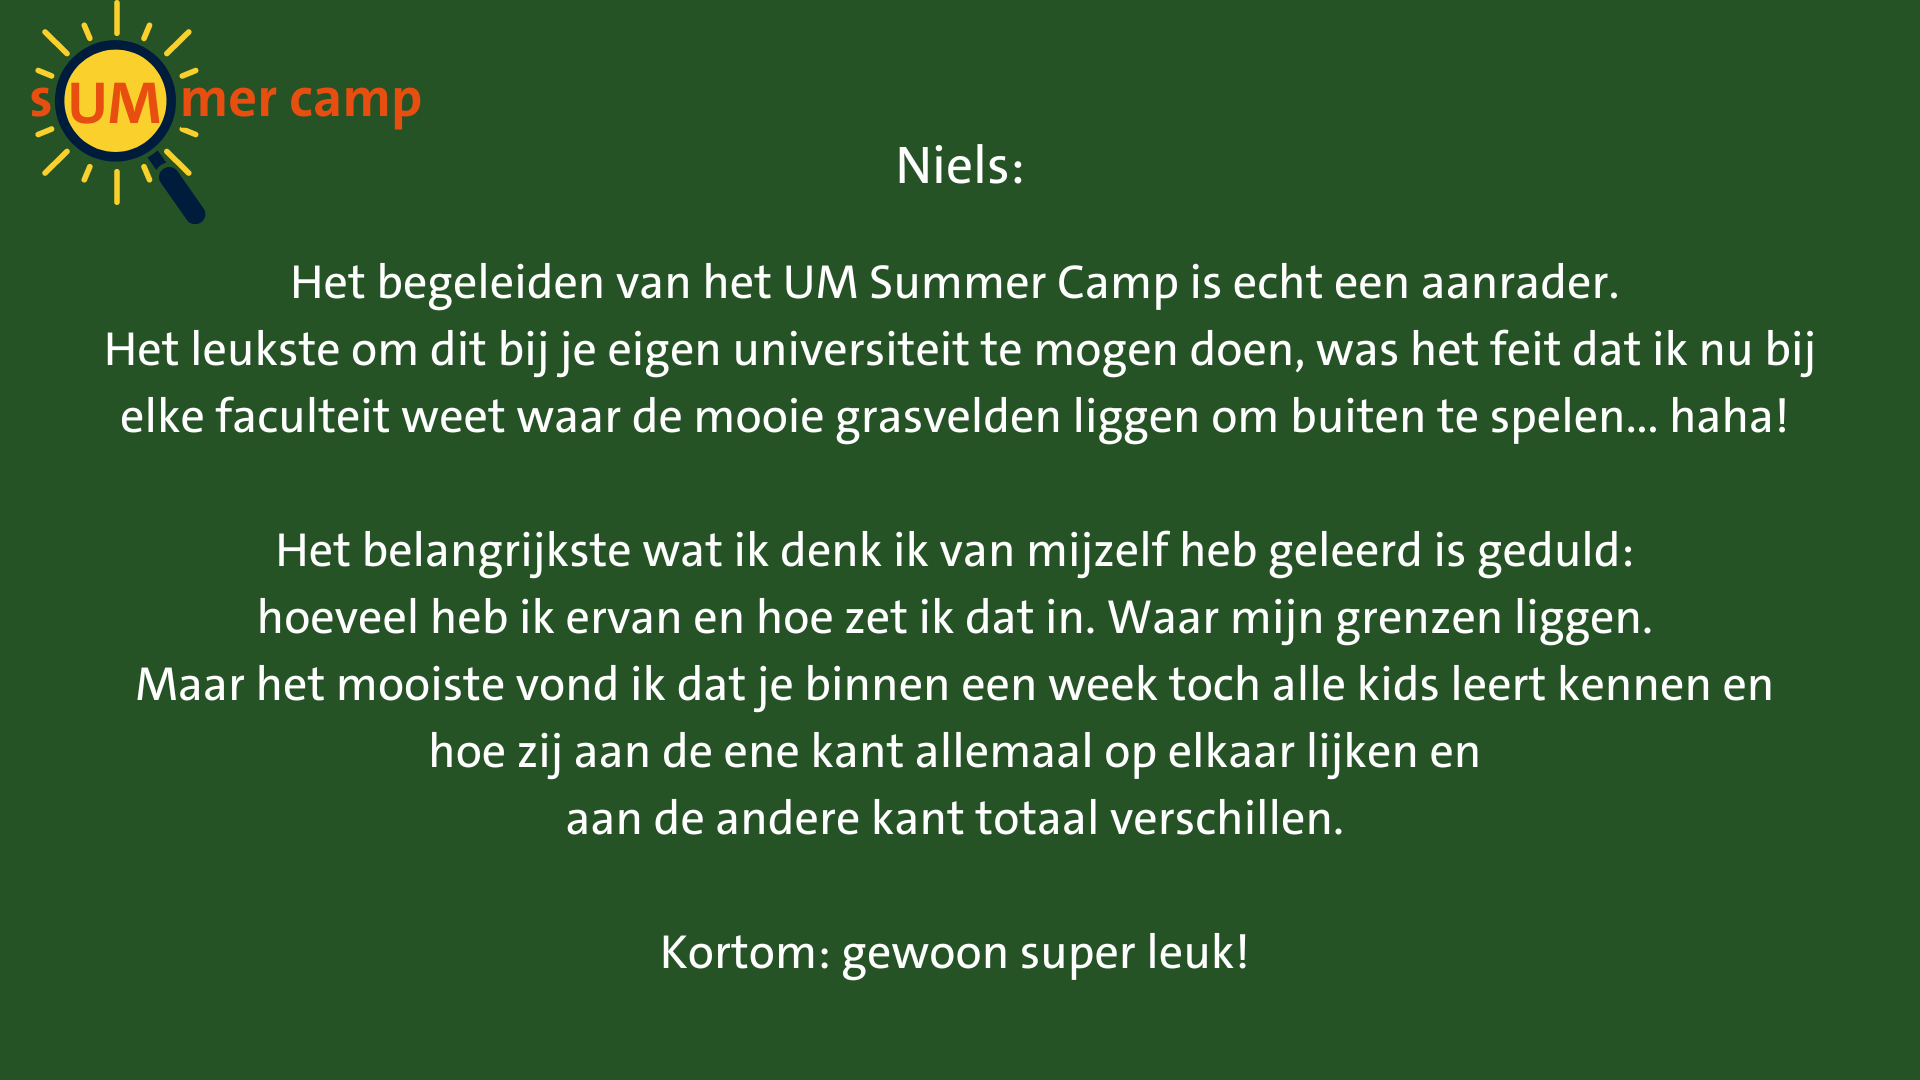 Niels' experience